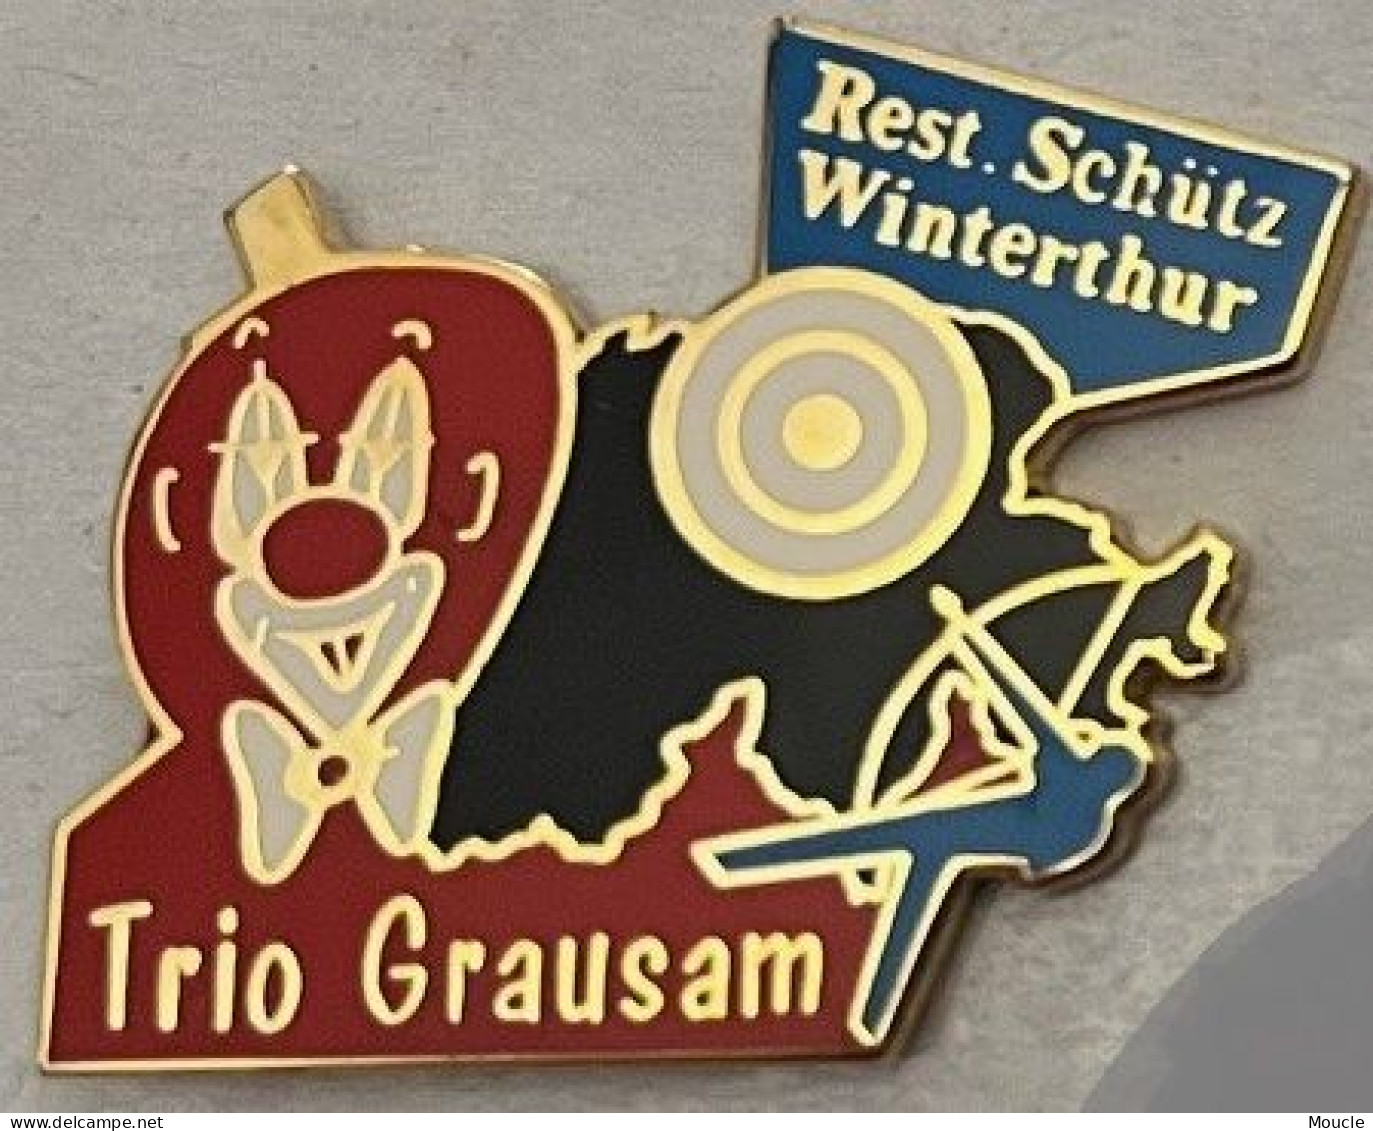 TIR A L'ARC CLUB -  TRIO GRAUSAM - CLOWN - REST. SCHÜTZ - WINTERHUR - SUISSE - SCHWEIZ - FLECHE - CIBLE -  ARCHER - (34) - Bogenschiessen